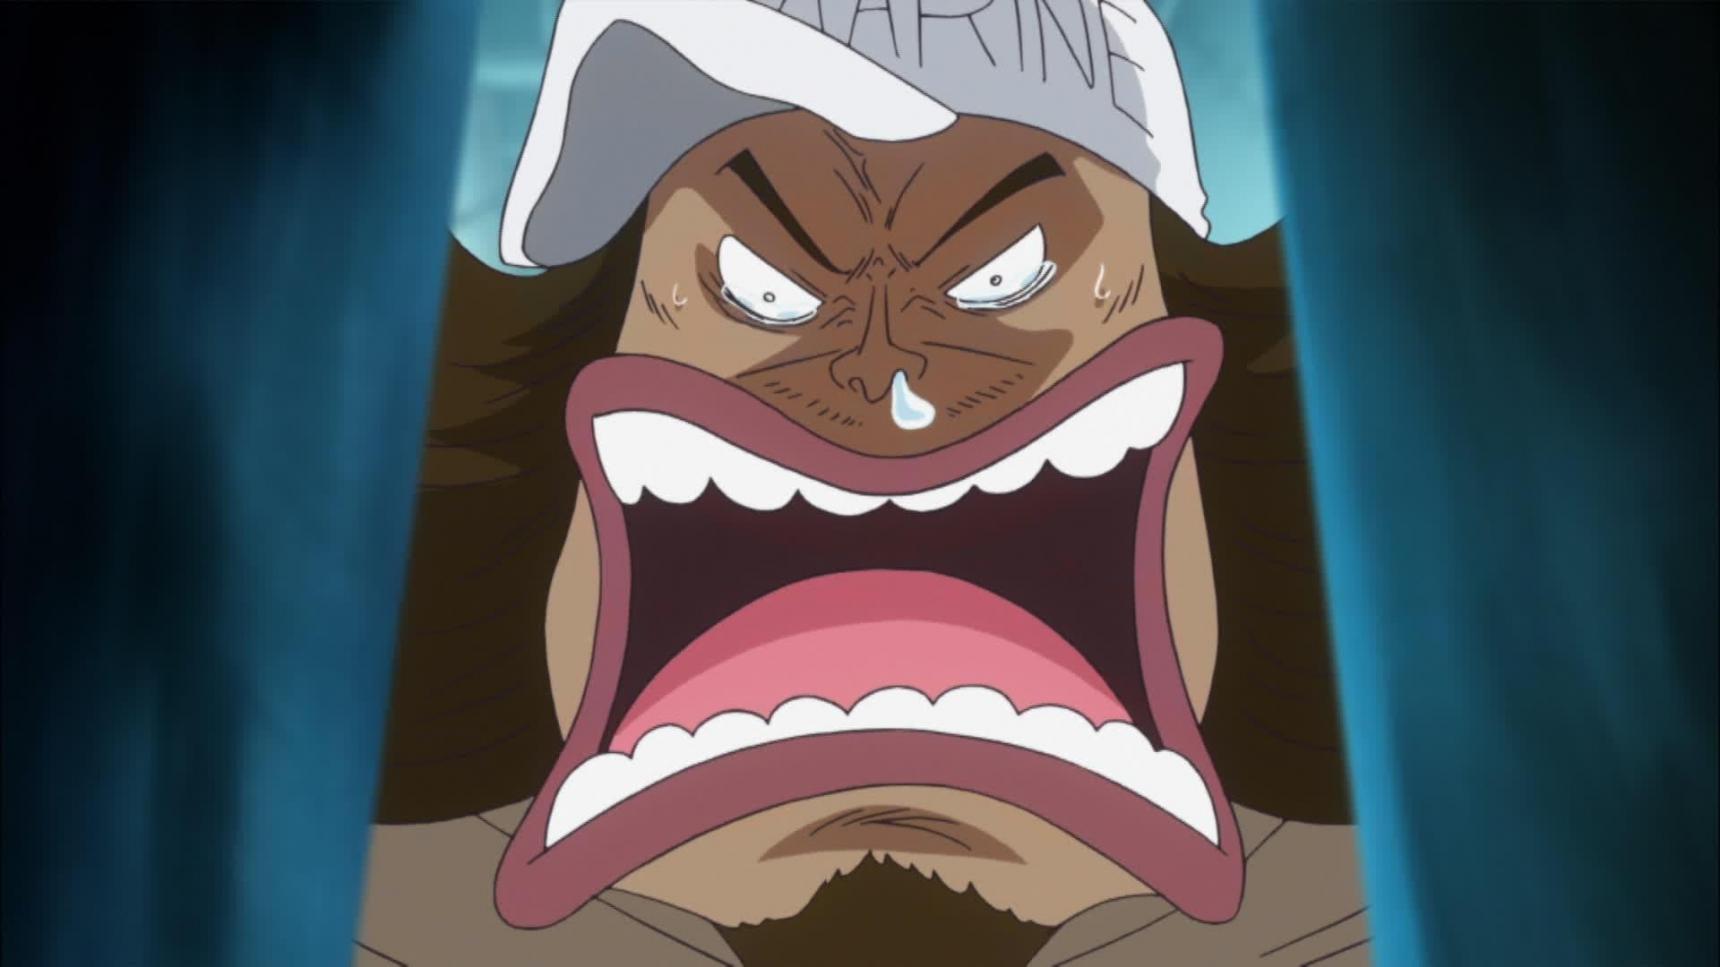 Poster del episodio 606 de One Piece online